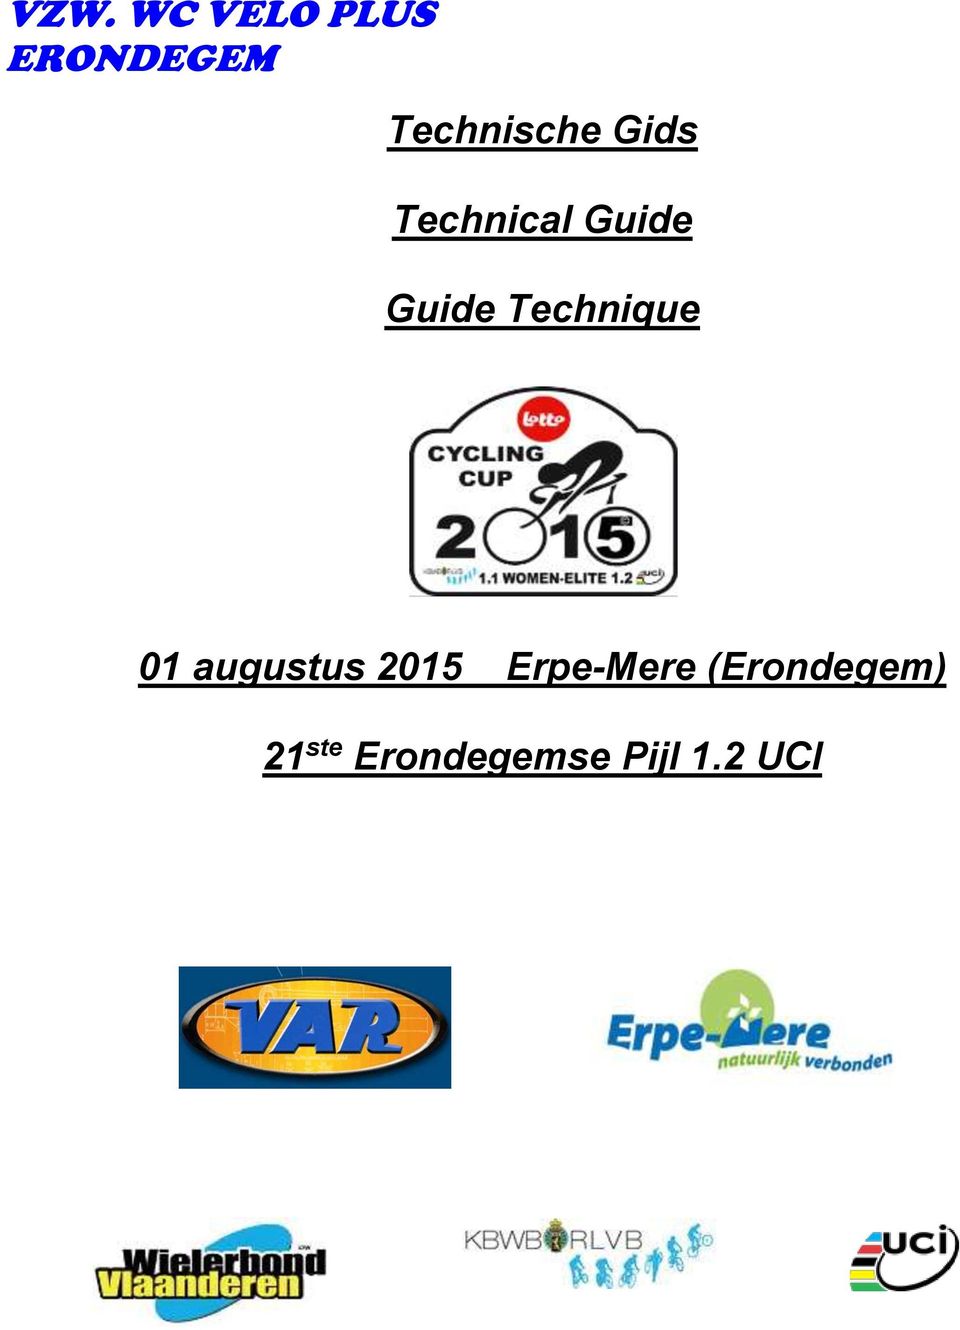 Guide Technique 01 augustus 2015